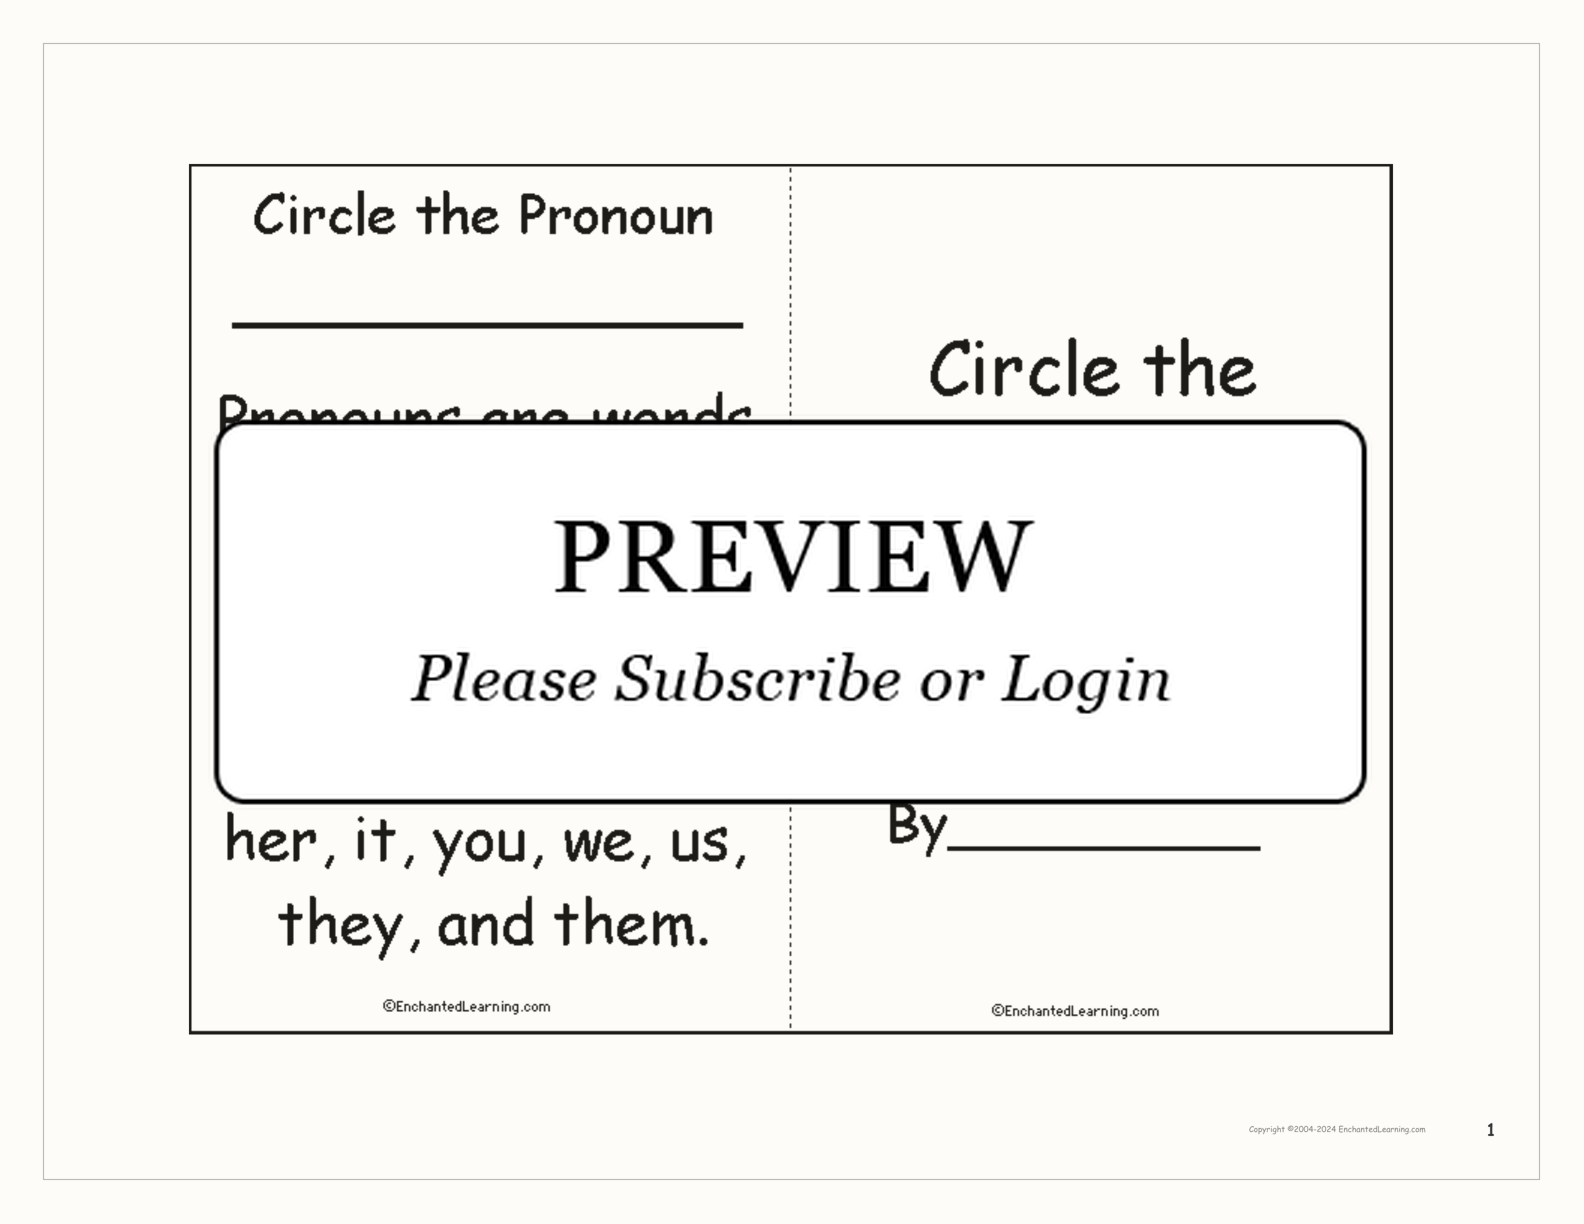 Circle the Pronouns Book interactive printout page 1